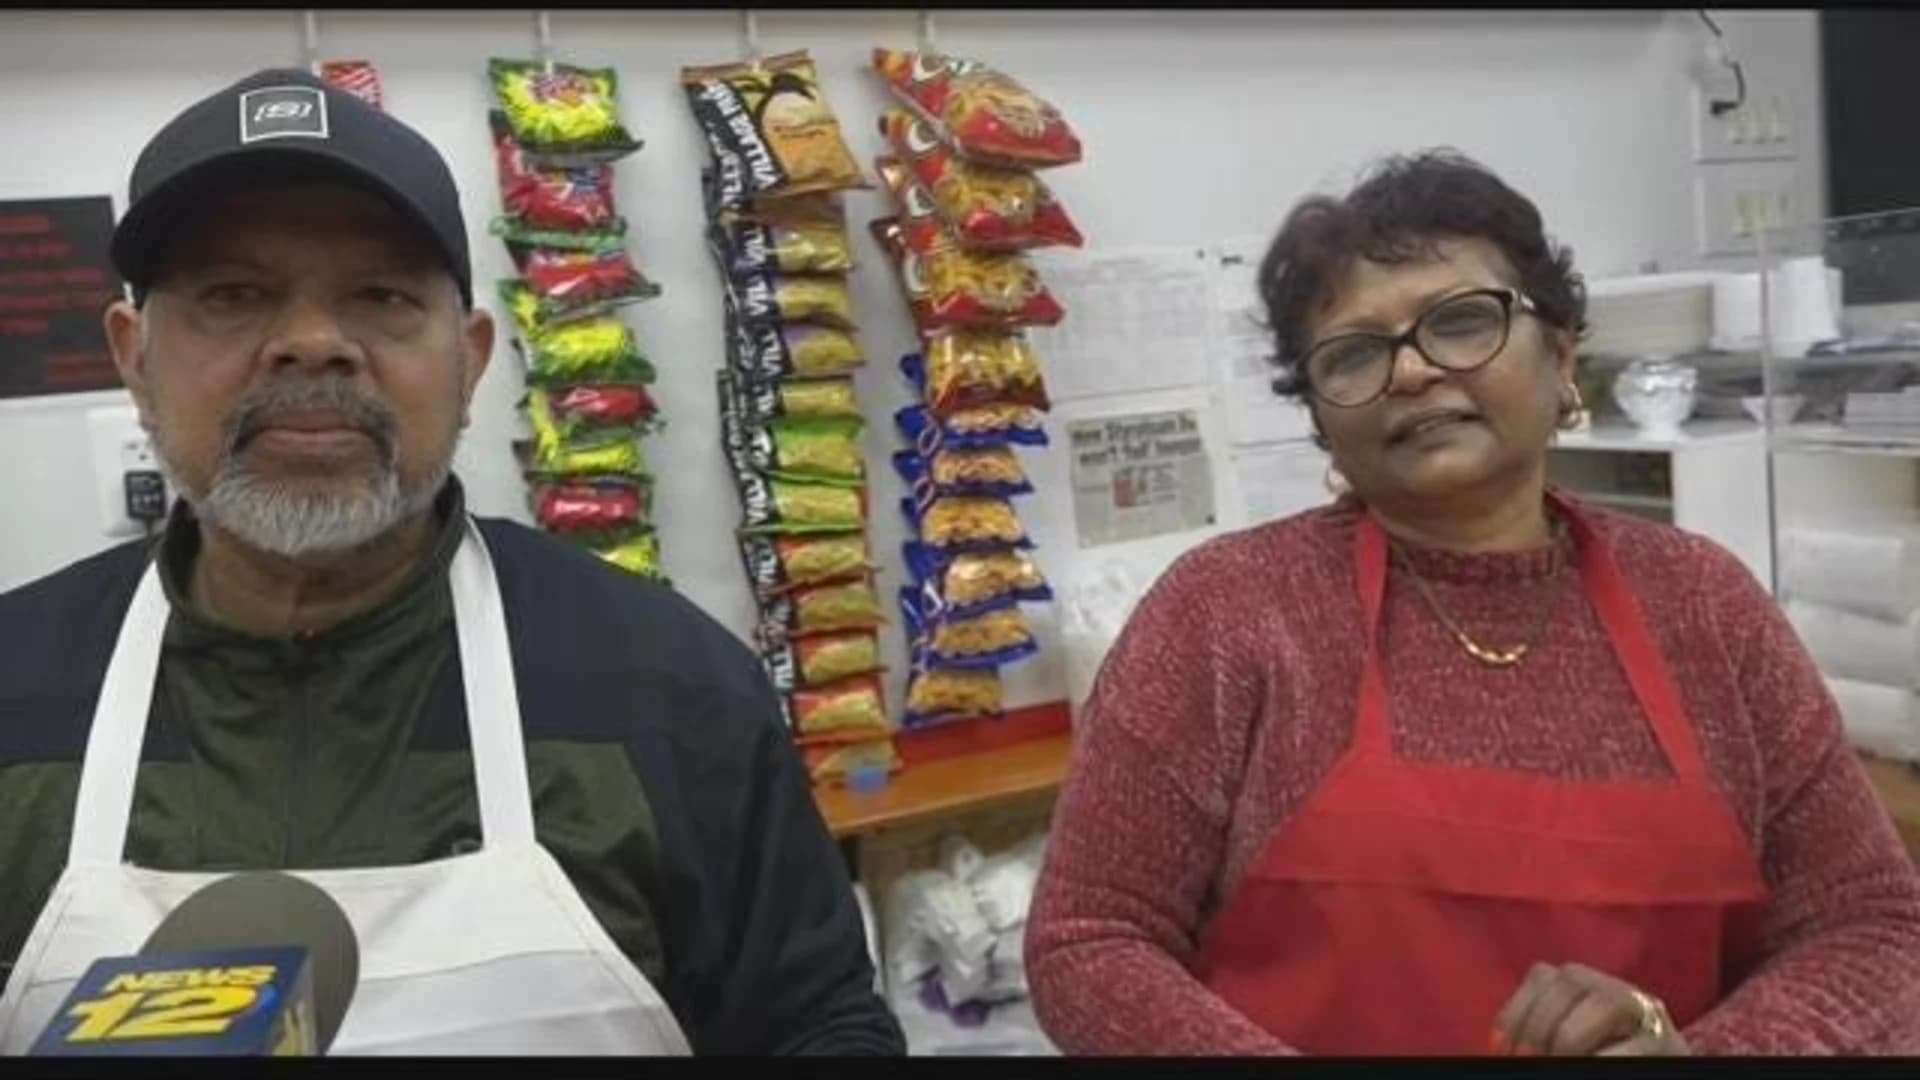 Trinidadian Bakery receives James Beard Award